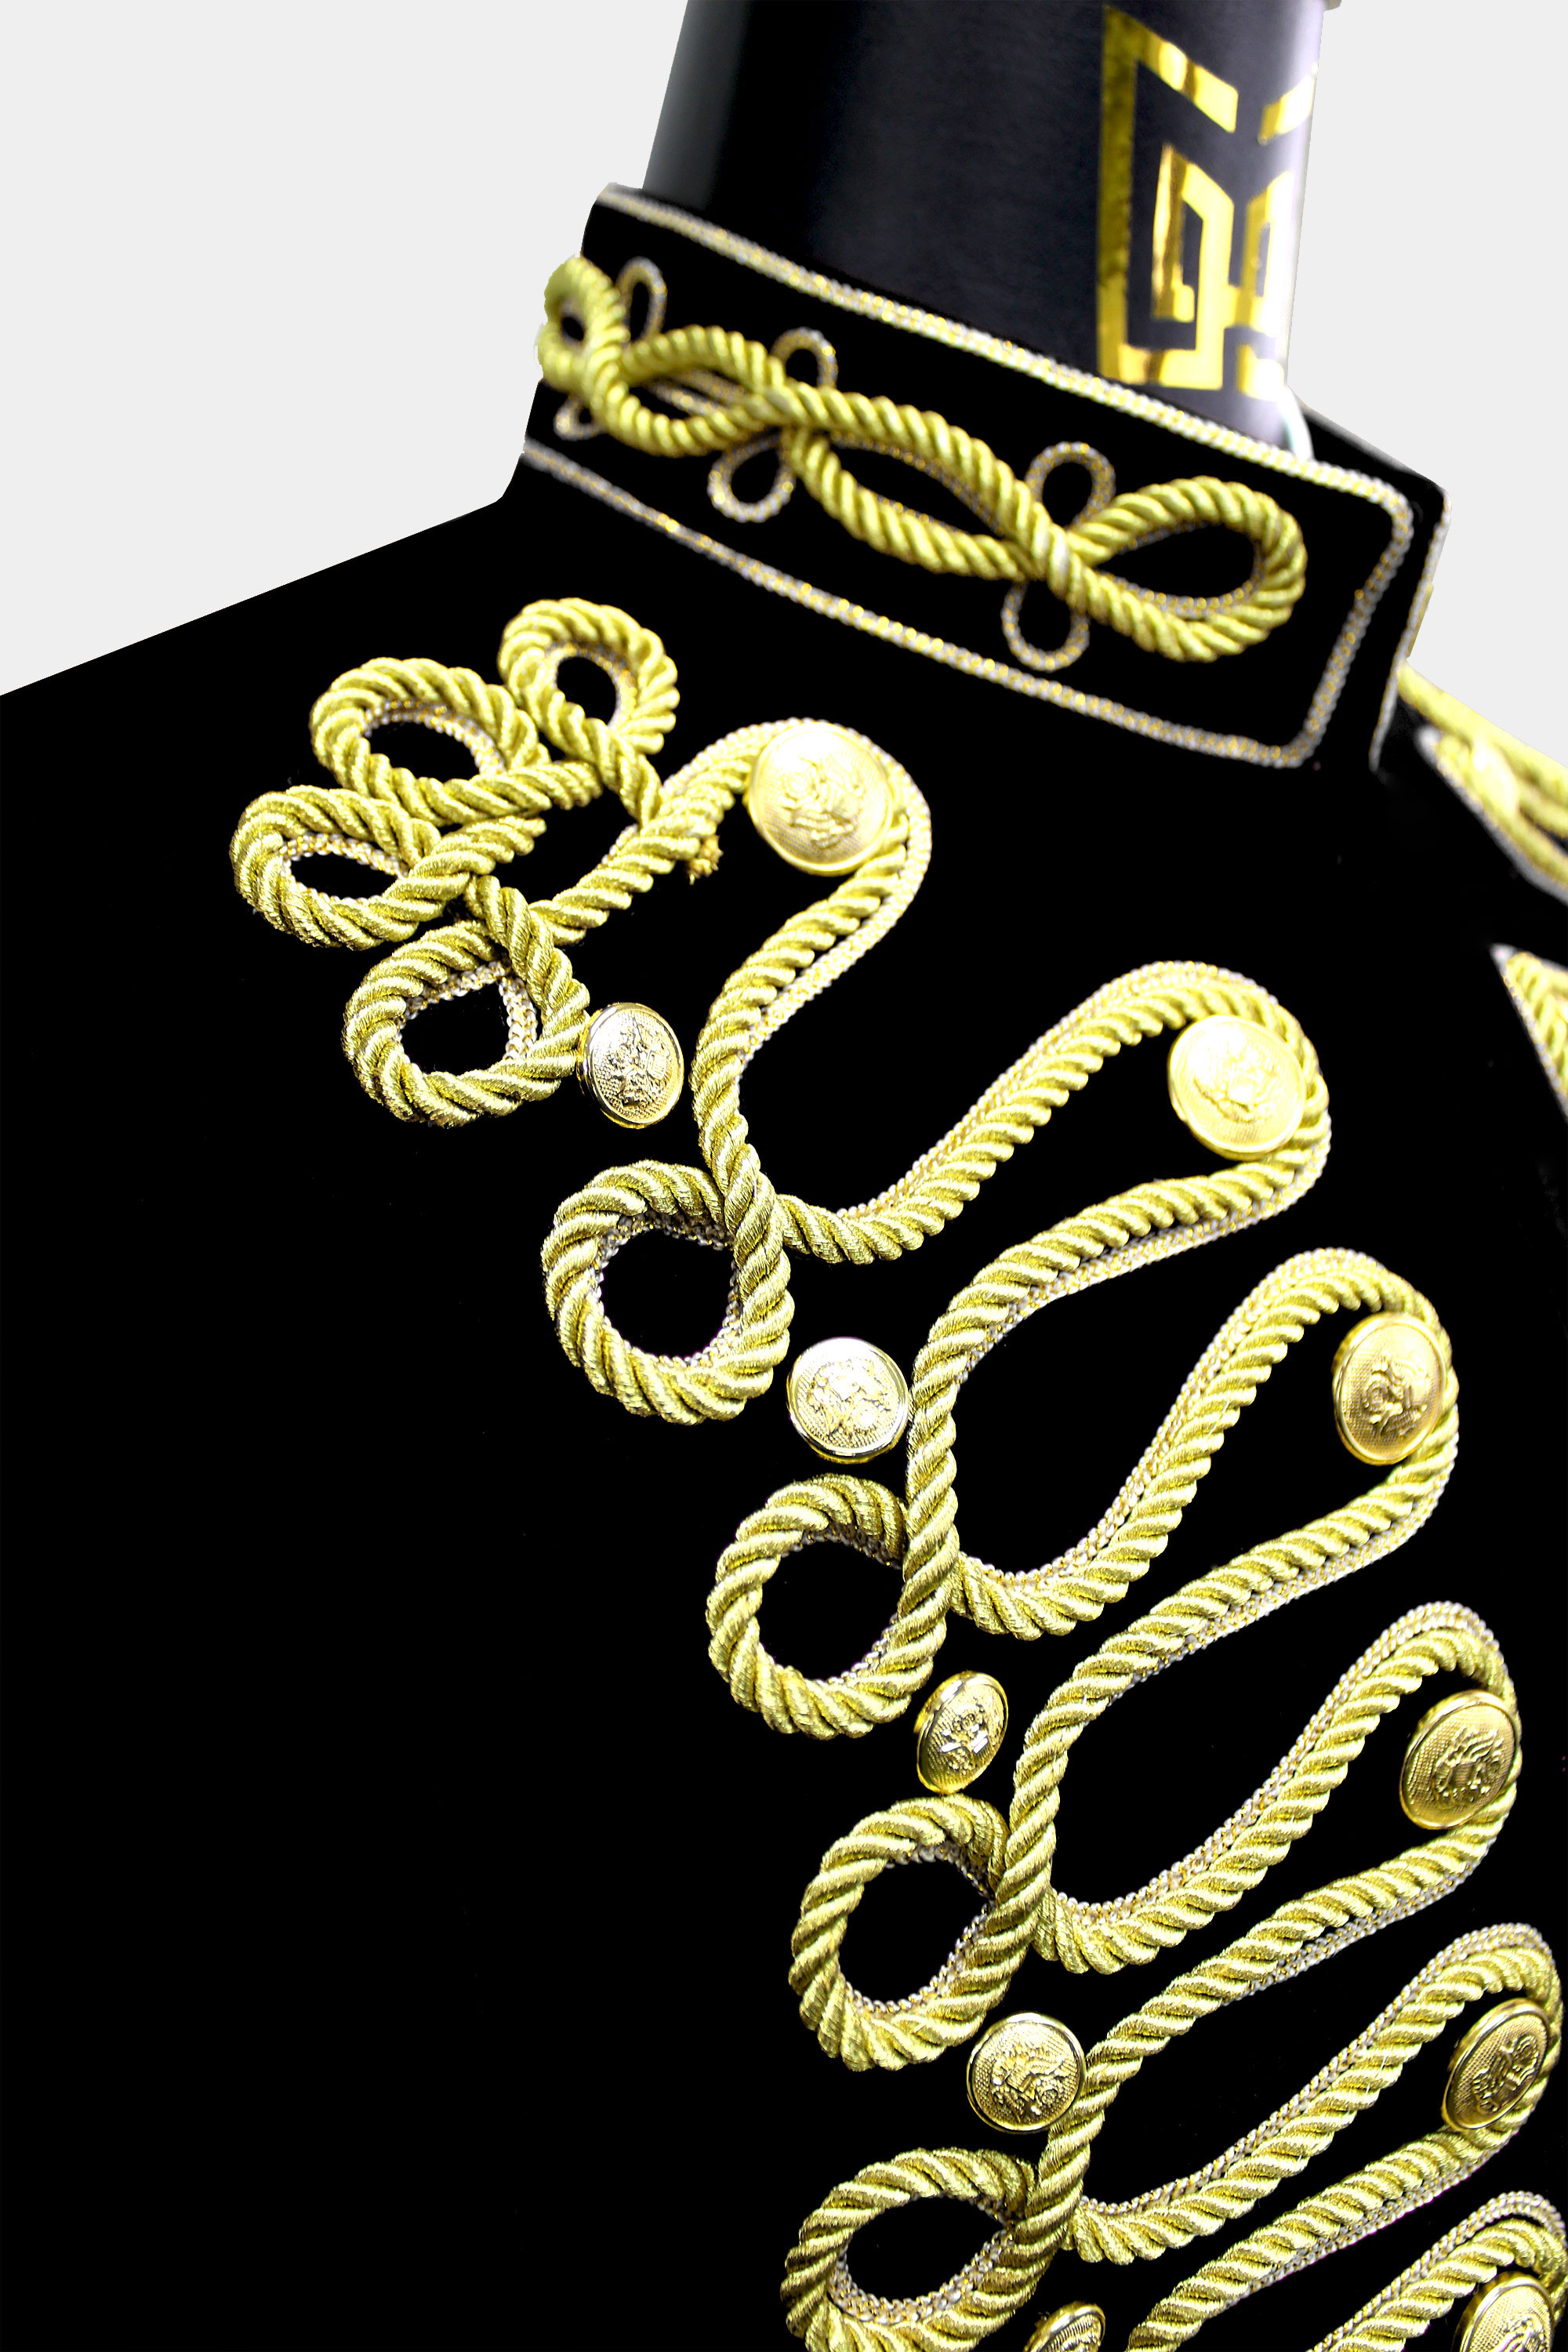 Black-Gold-Embroidered-Tuxedo-Jacket-from-Gentlemansguru.com